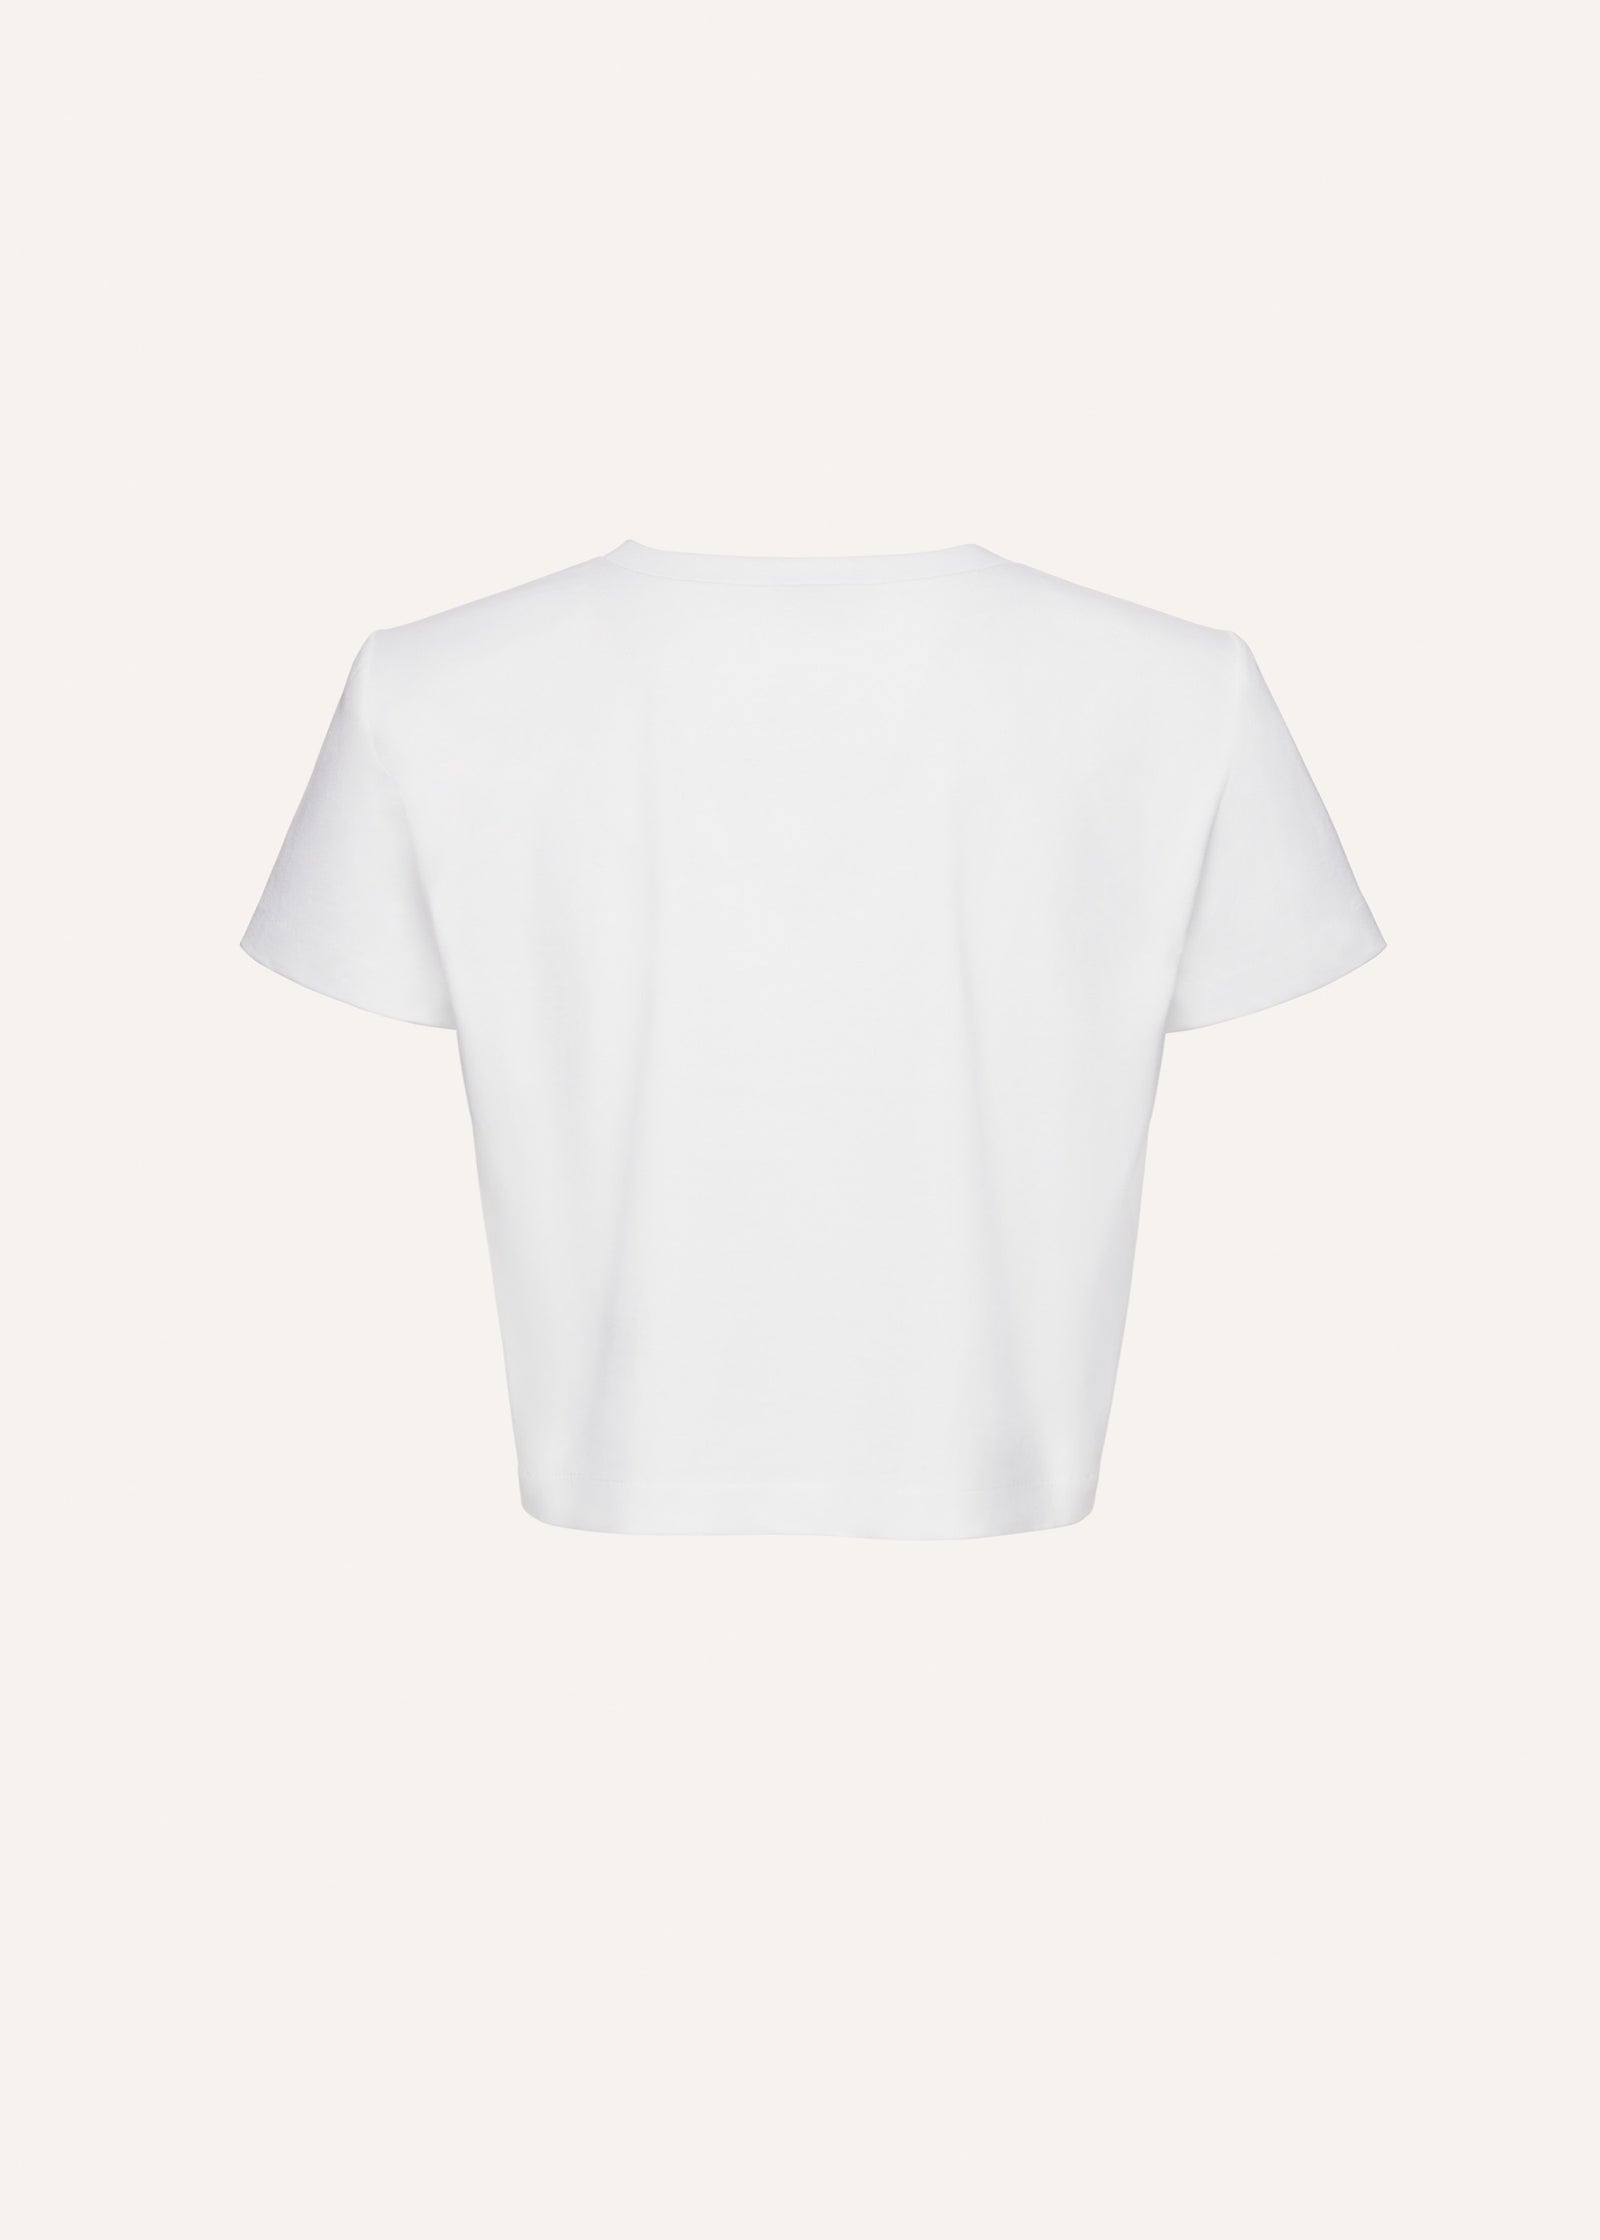 Crochet bra t-shirt in white | Magda Butrym